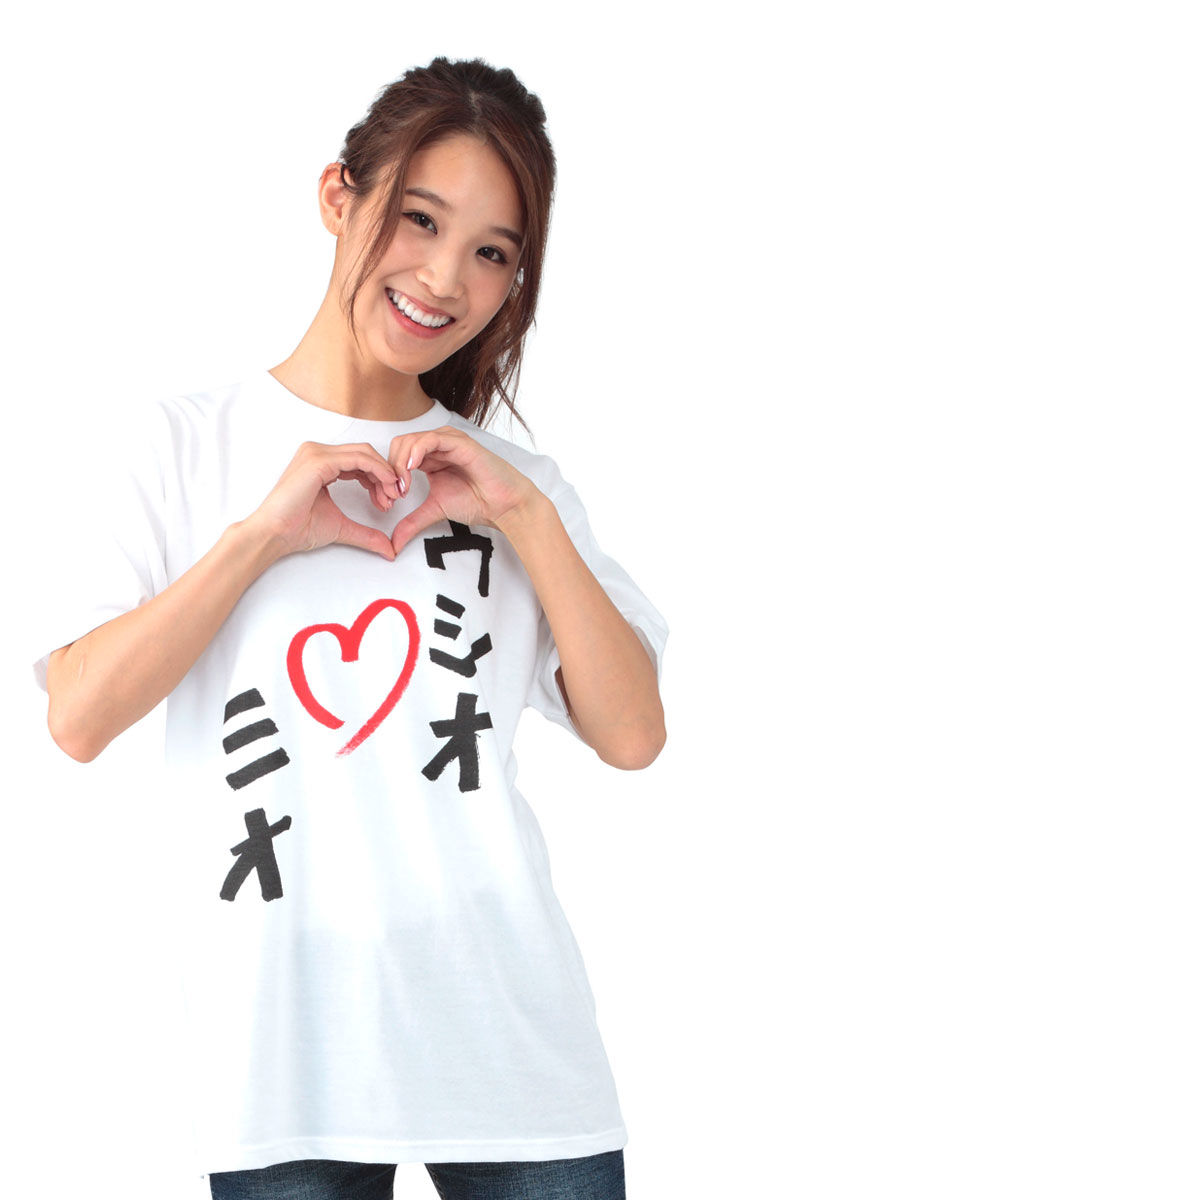 Vejrudsigt ilt tømmerflåde Ultraman R/B UshioMinato selected T-shirts Ushio♡Mio | ULTRAMAN | PREMIUM  BANDAI USA Online Store for Action Figures, Model Kits, Toys and more